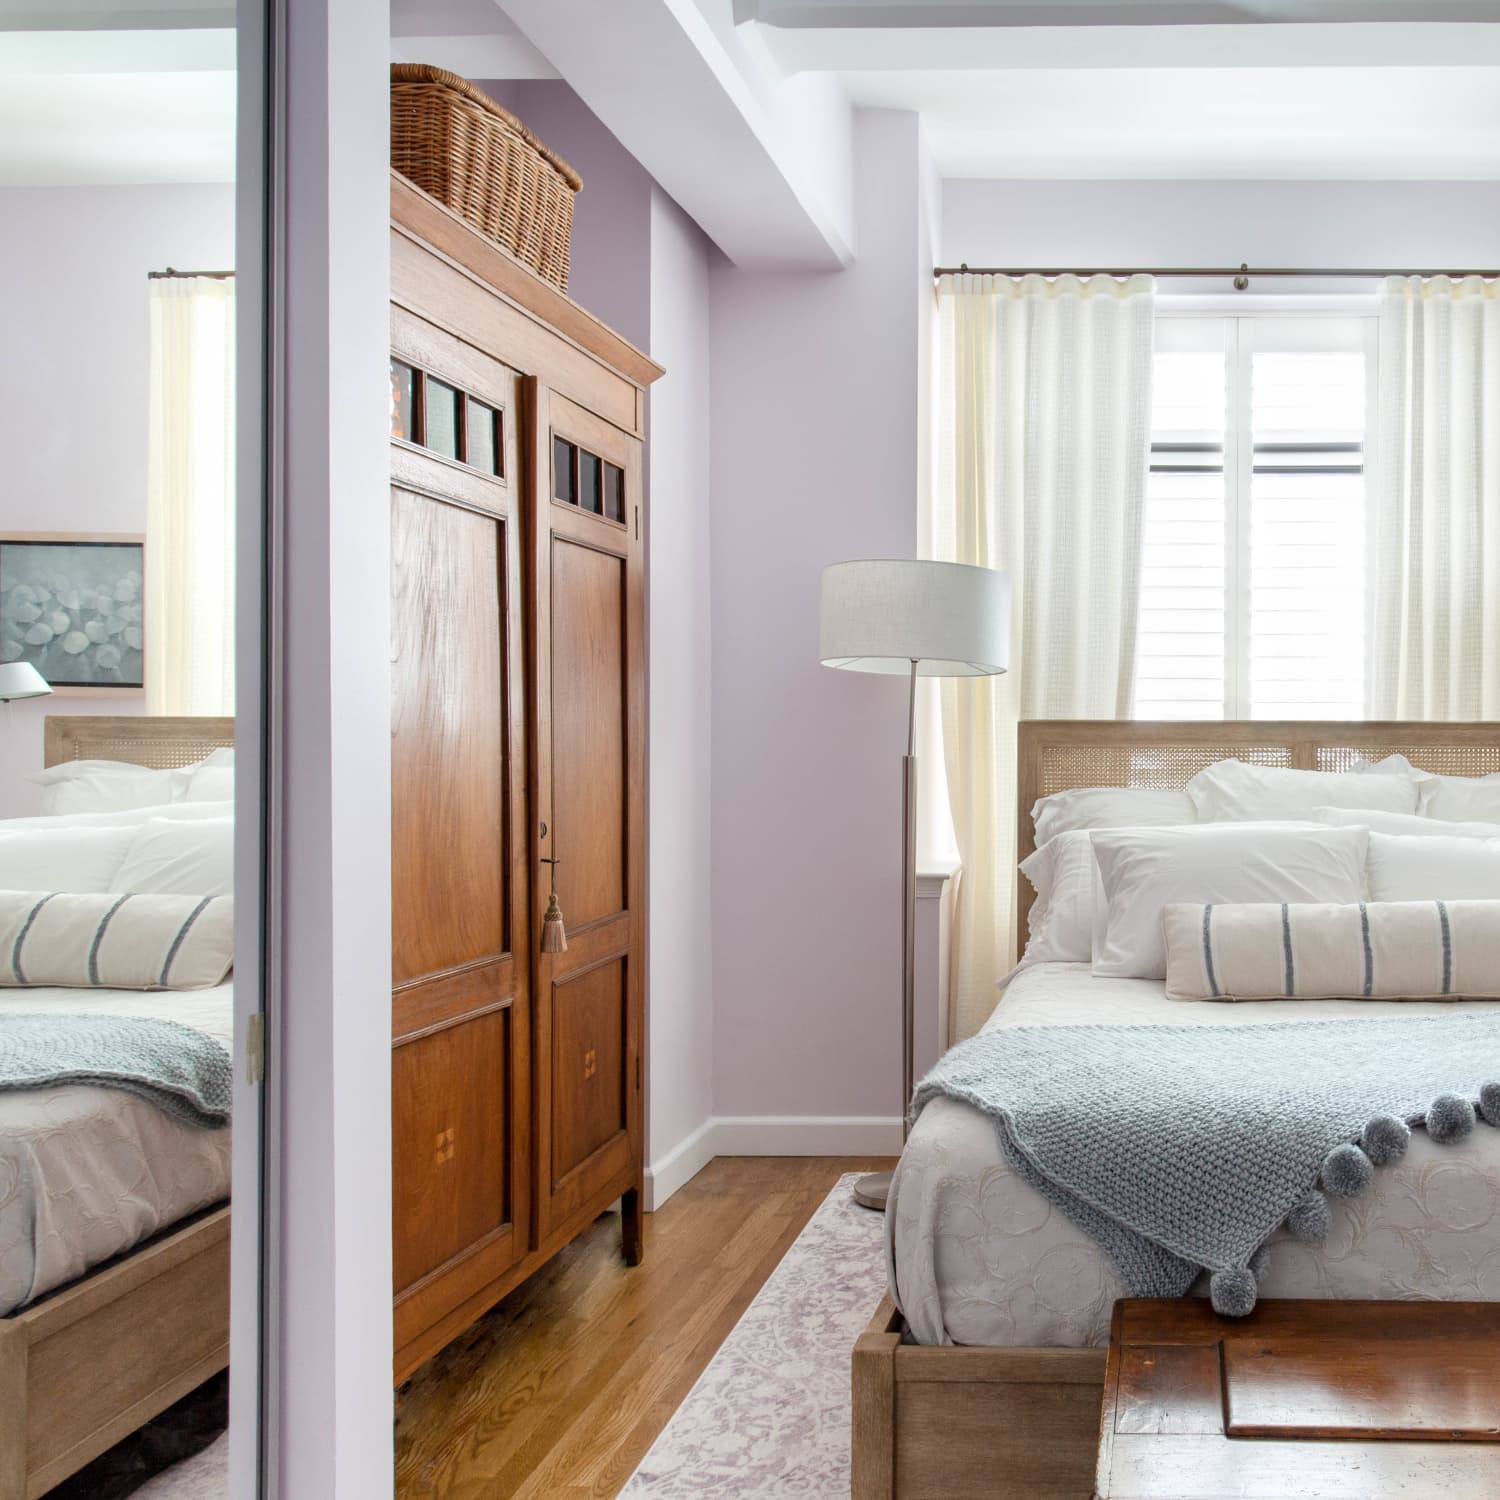 Lavender Home Decor in 2020, Lavender decor, Lavender bedroom decor,  Bathroom flowers